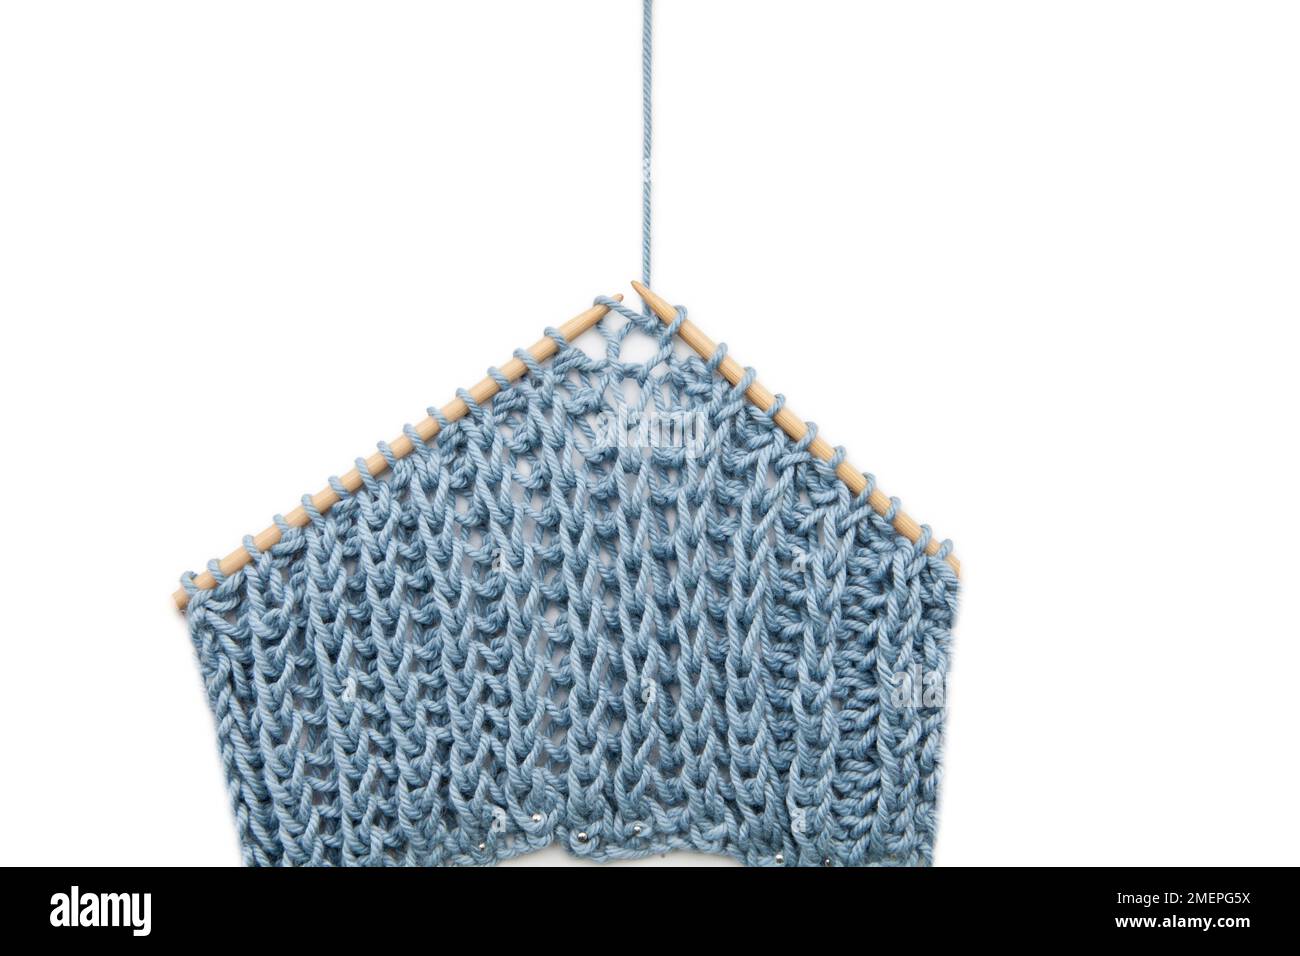 Double stitch knitting technique Stock Photo